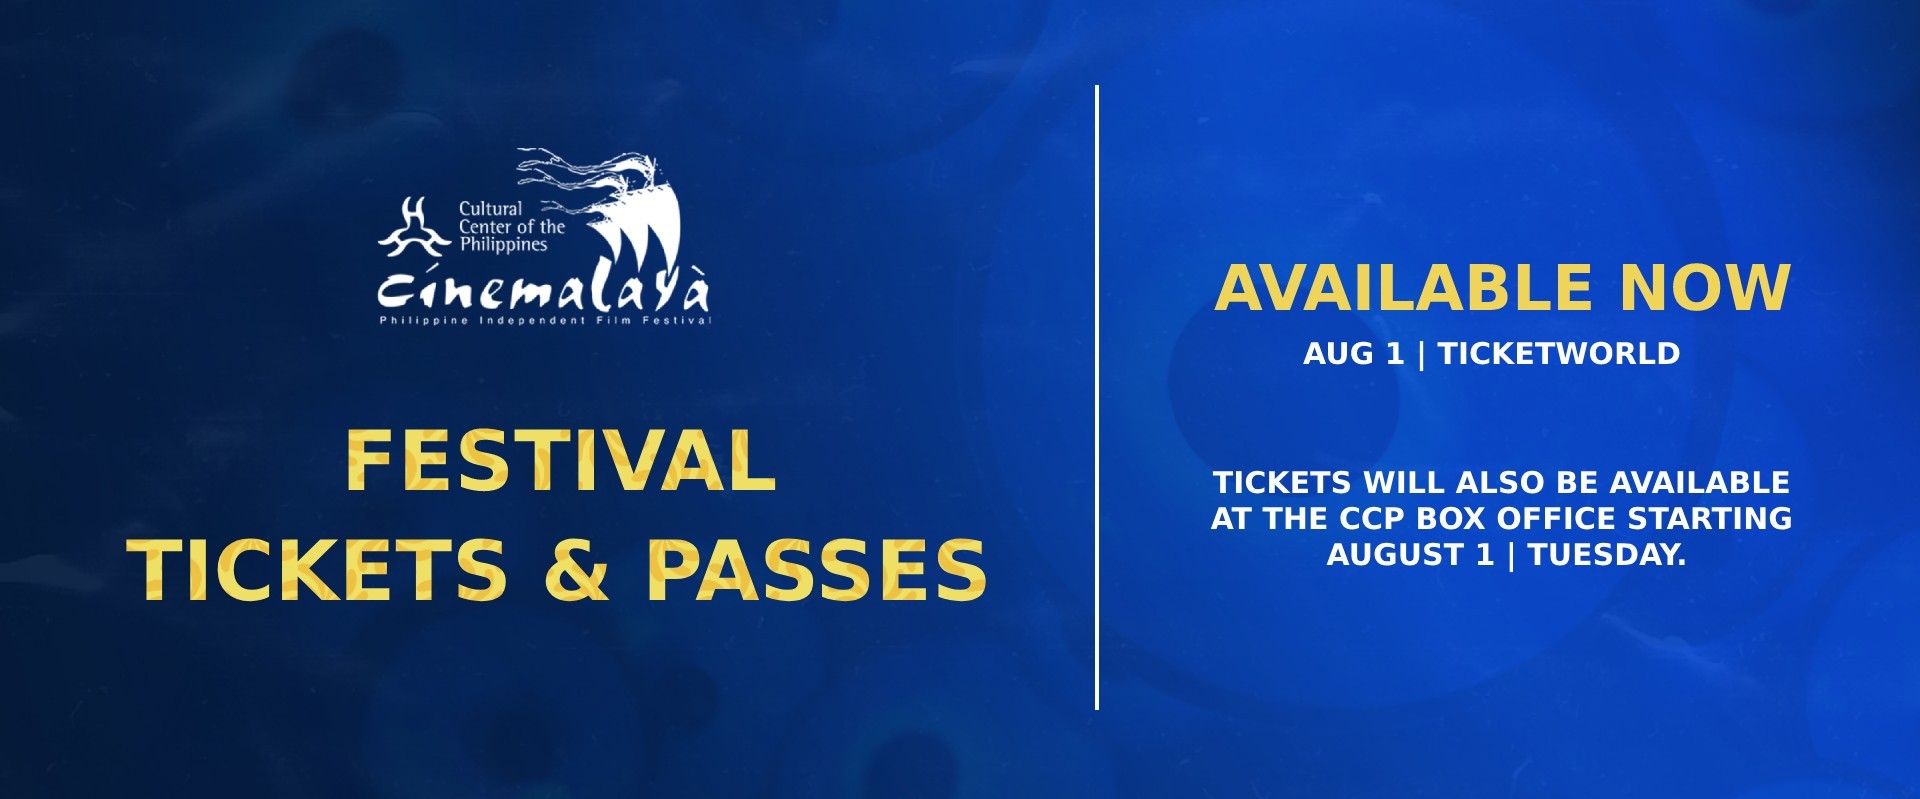 Cinemalaya Festival Ticket